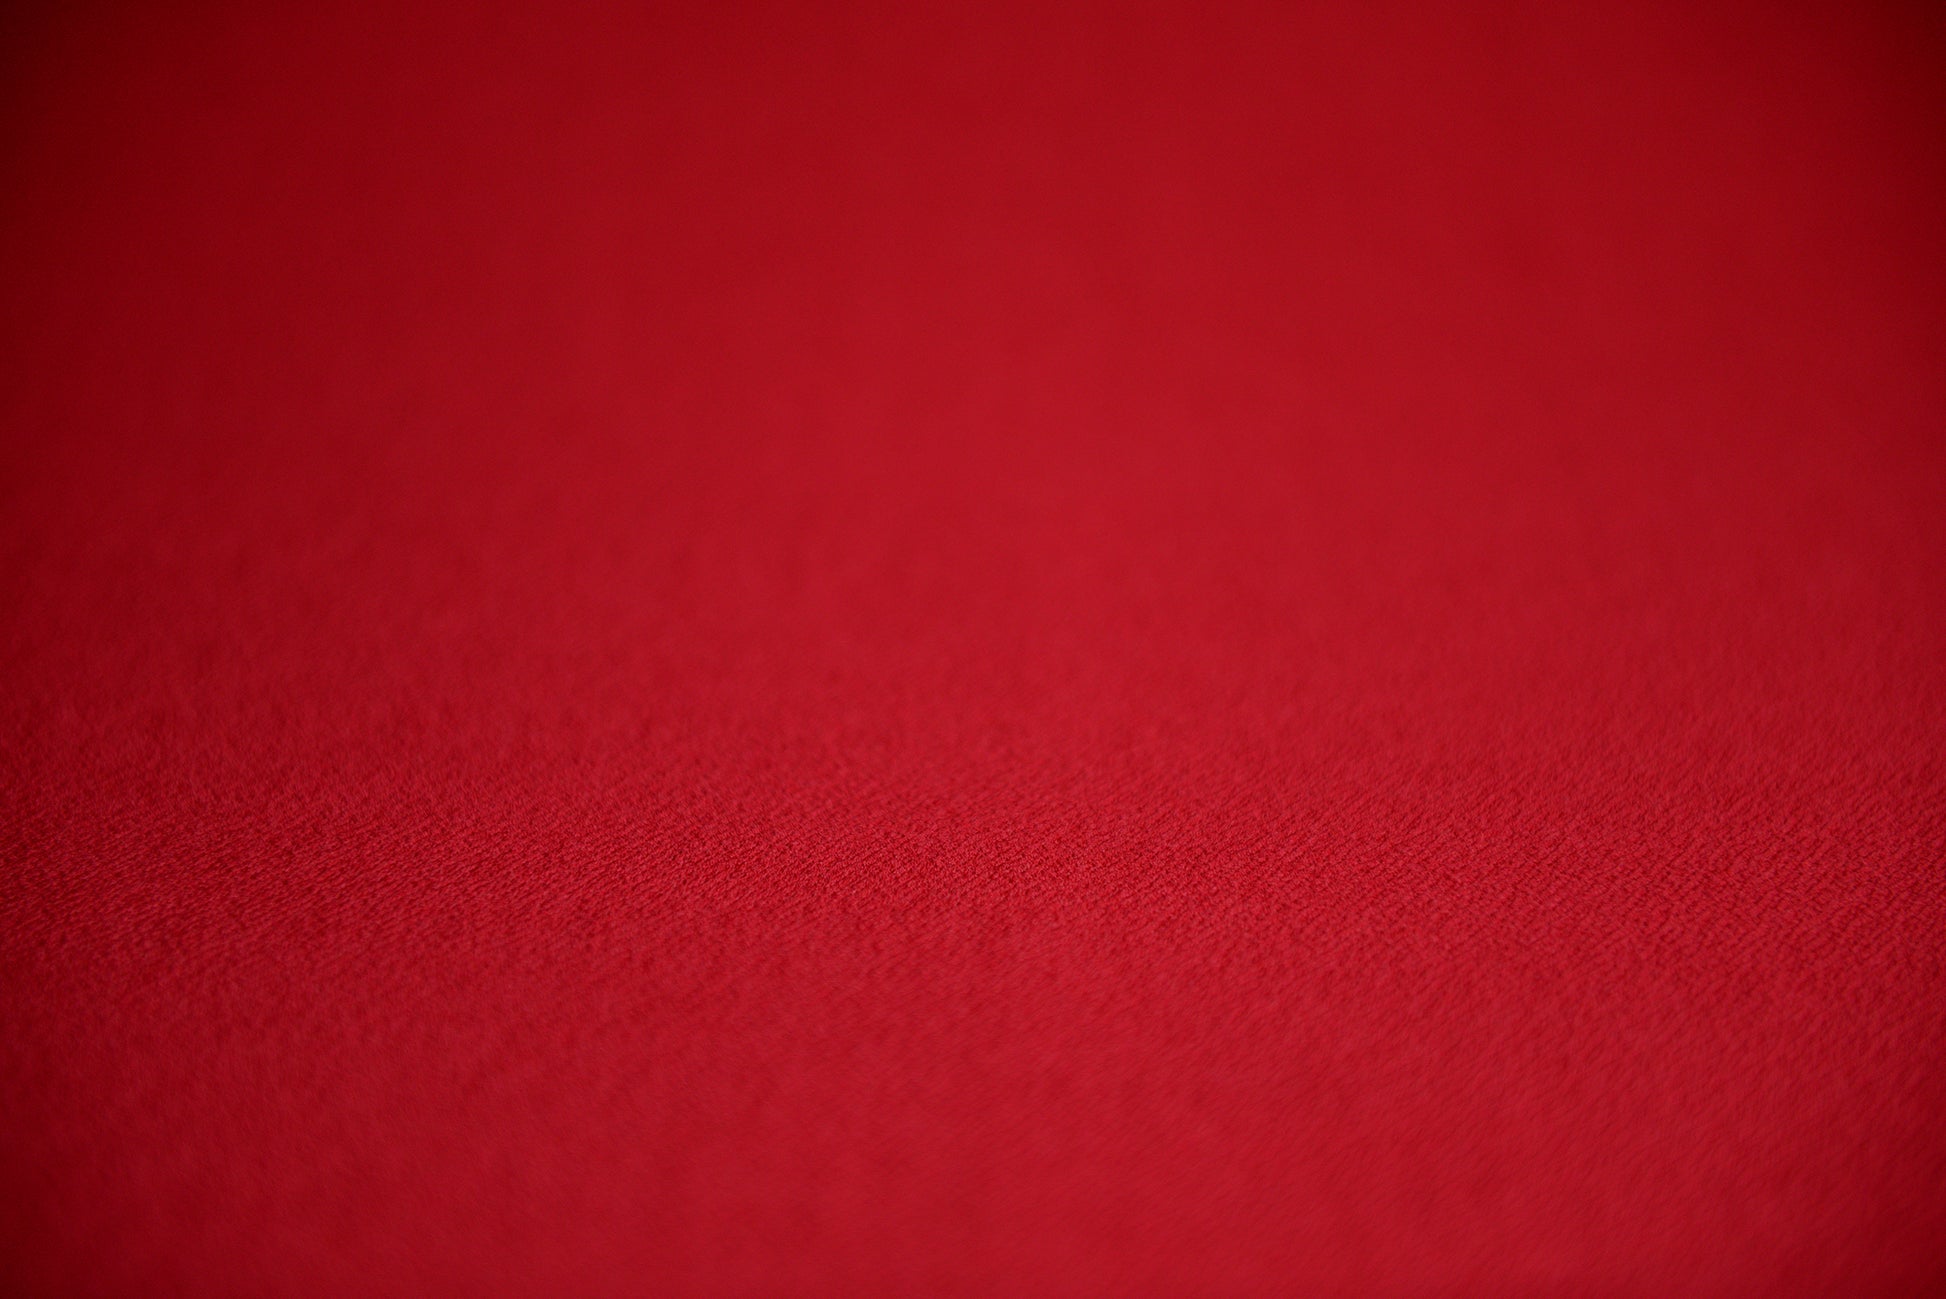 Bean Bag Fabric - Textured - Red-Newborn Photography Props